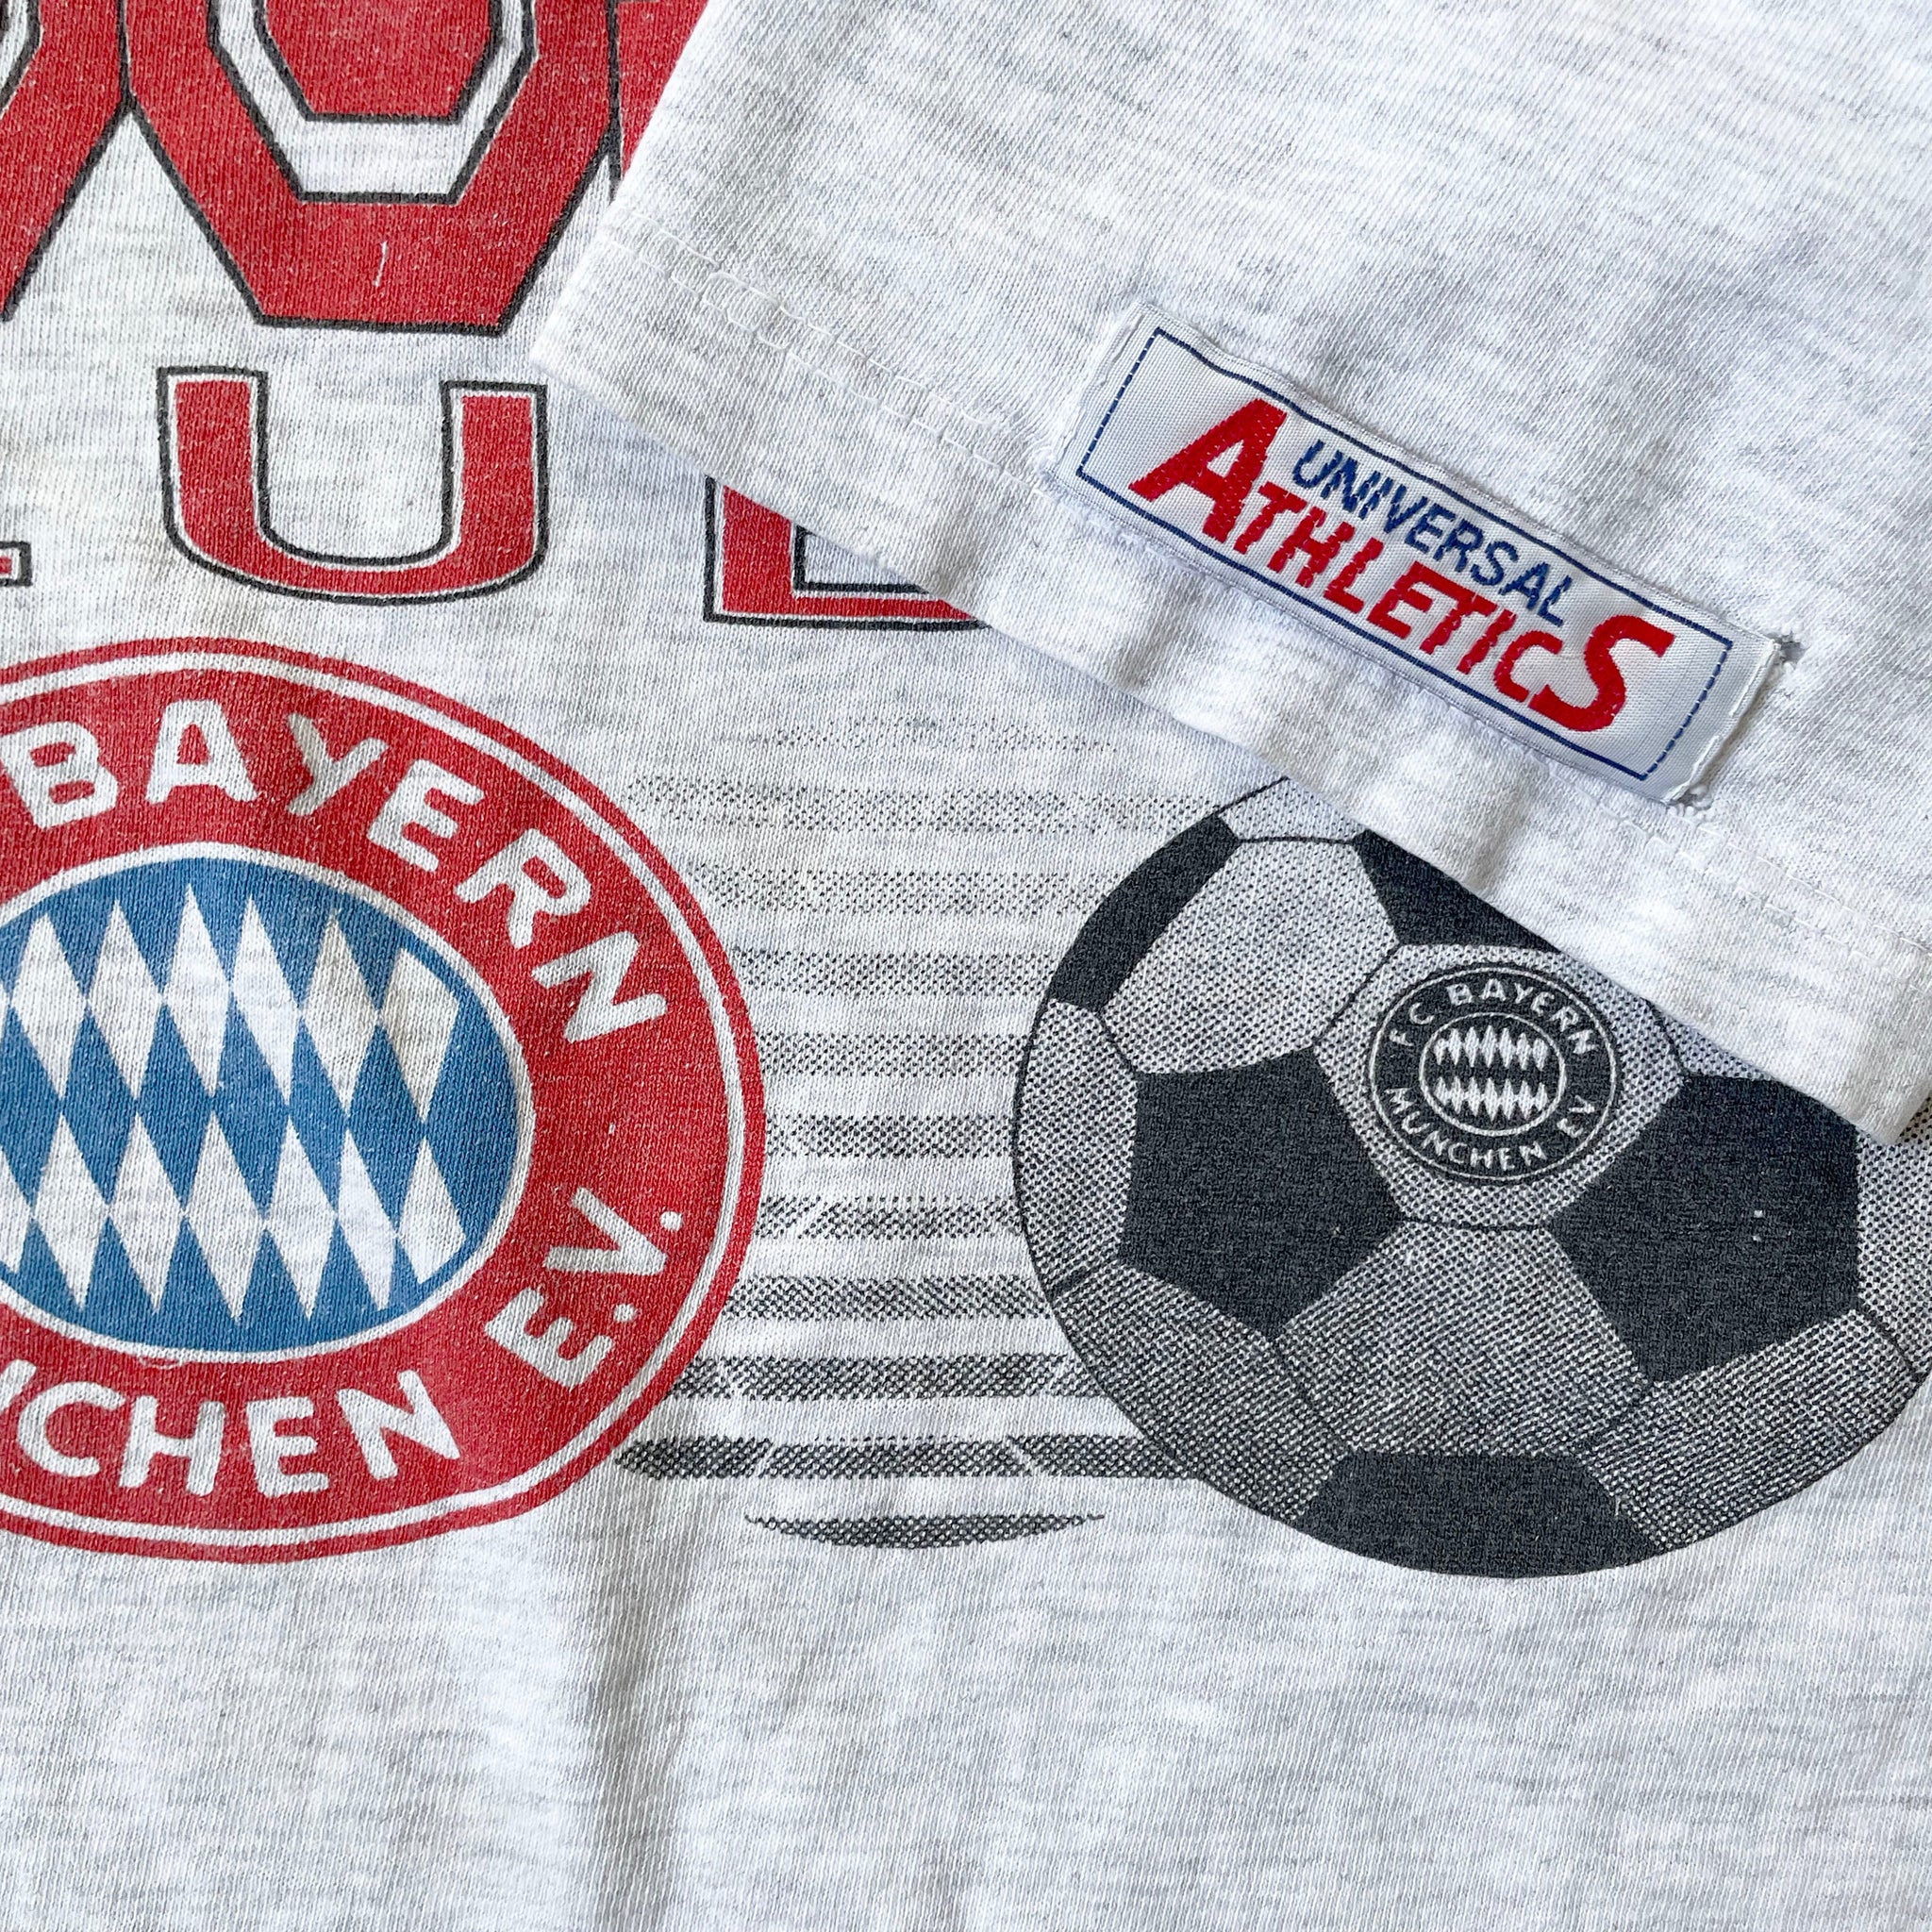 Munich Soccer Club T-Shirt - L